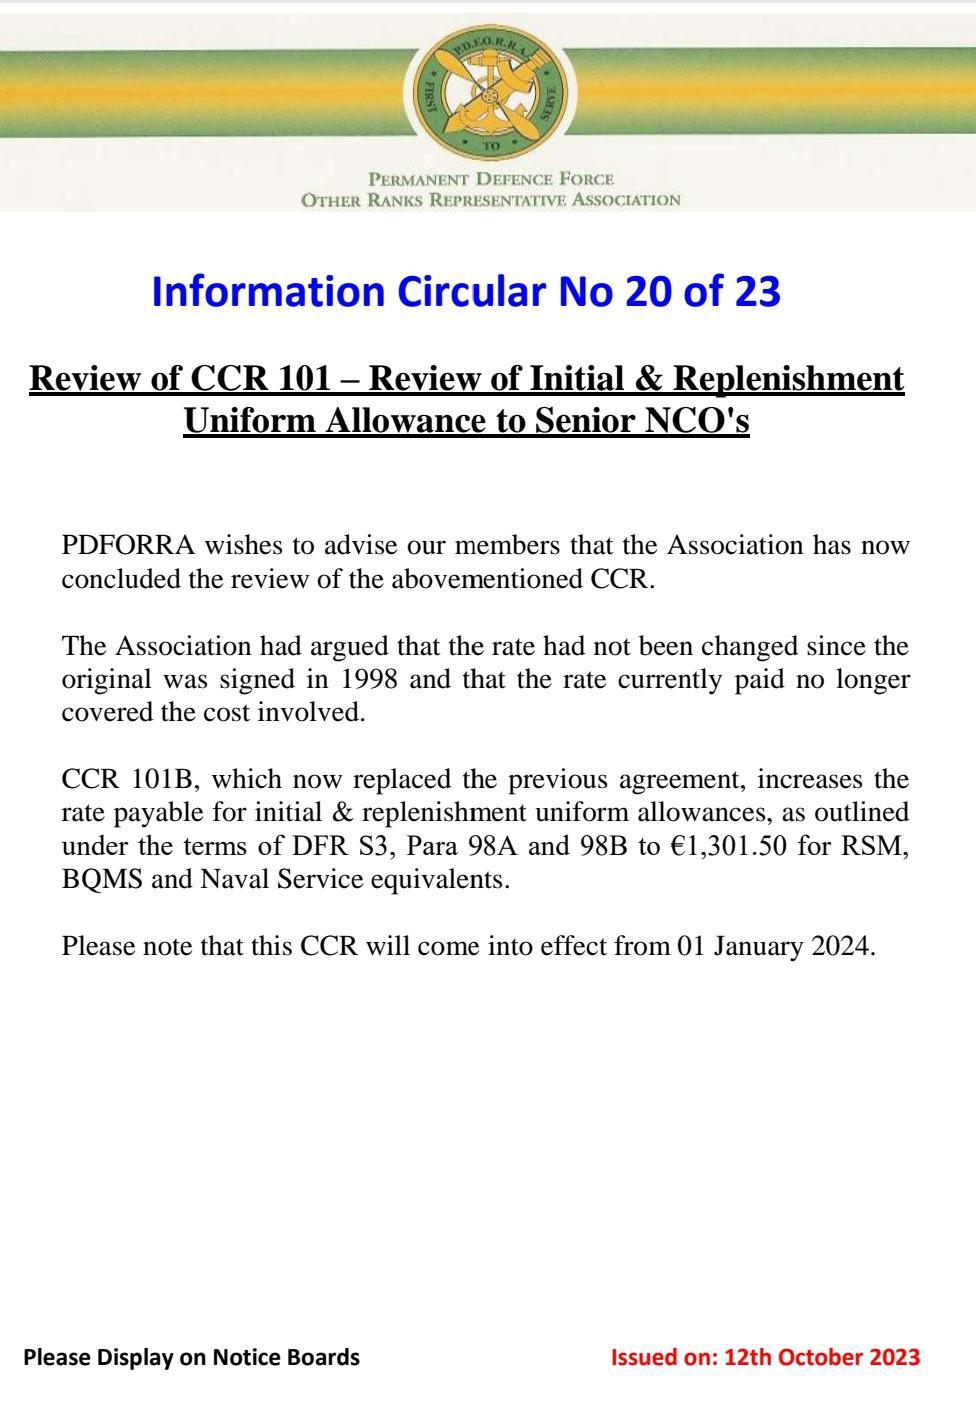 Information Circular No 20 of 23 - Review of CCR 101 - Initial & Replenishment uniform allowance for Senior NCO's